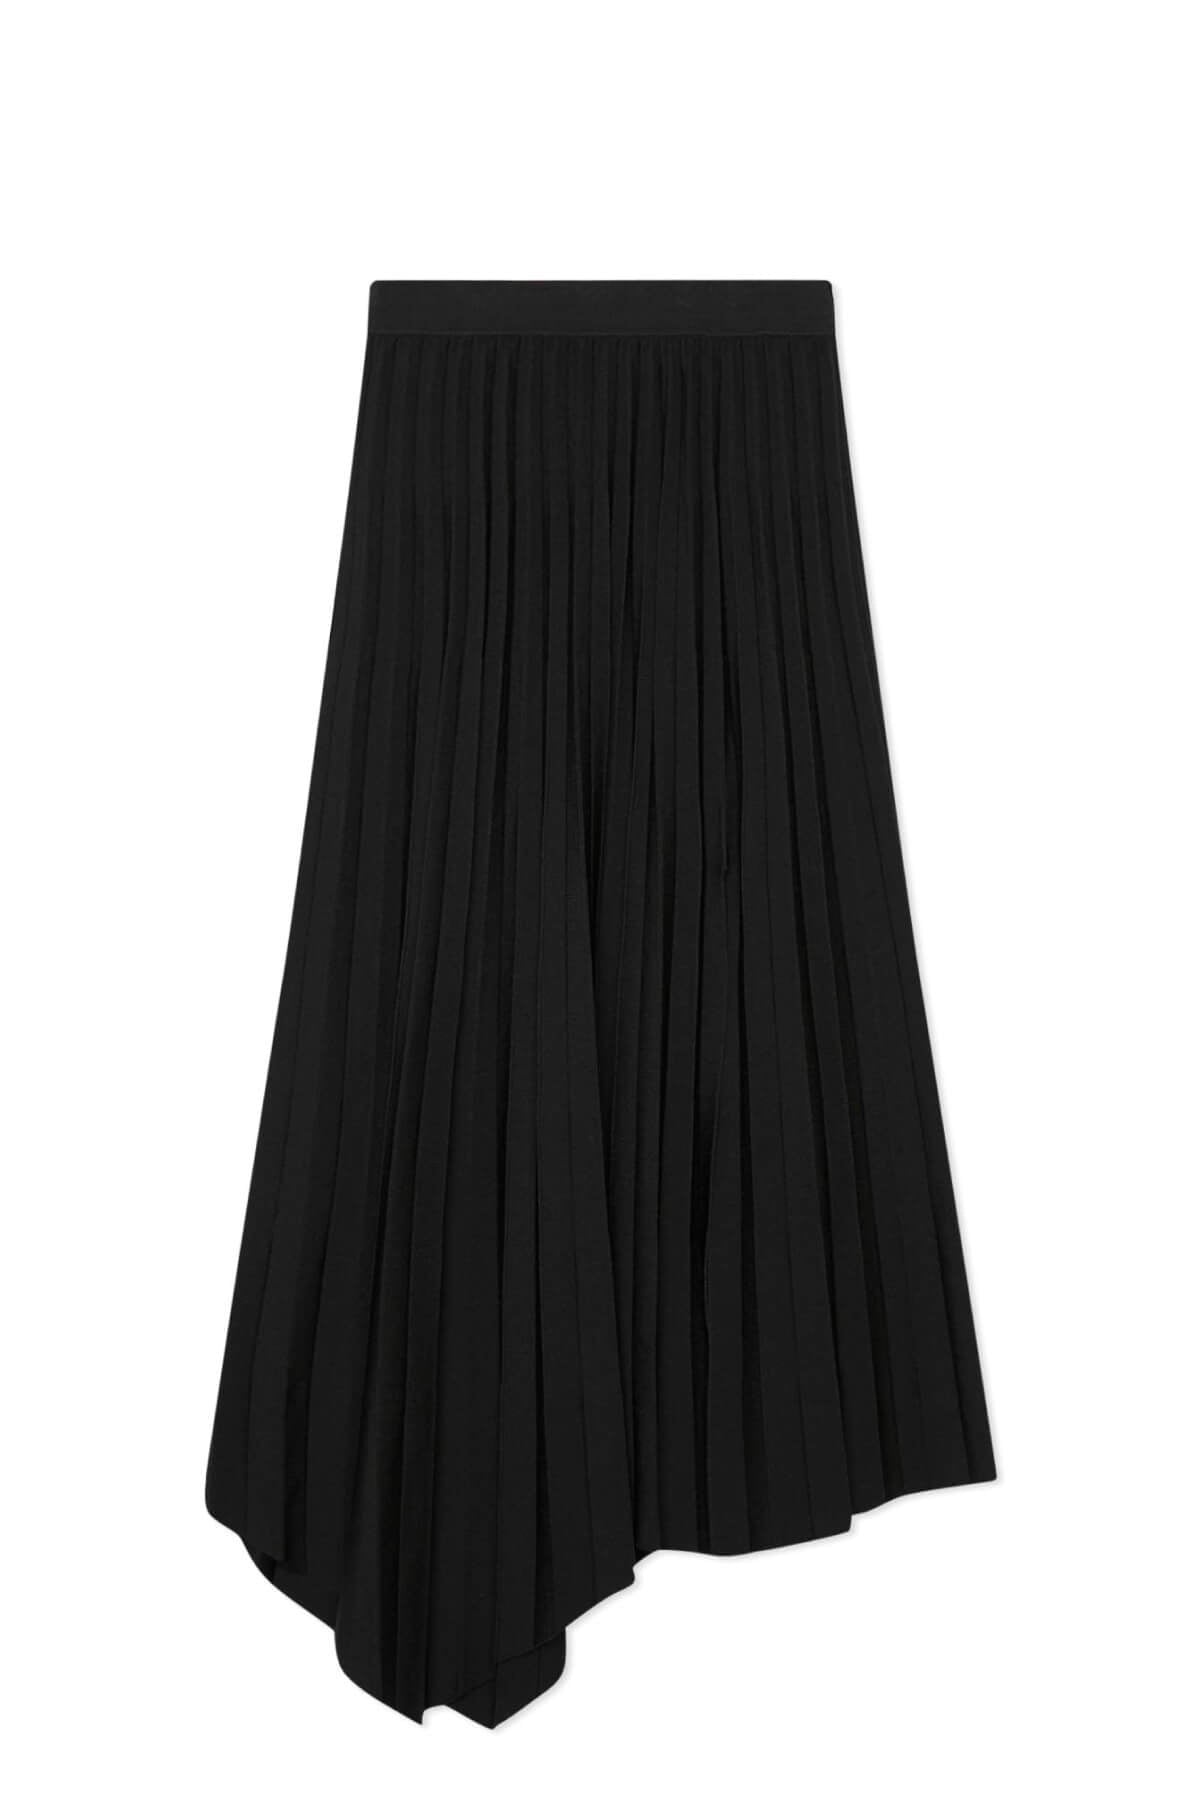 Jonathan Simkhai Arianna Compact Rib Pleated Skirt - Black